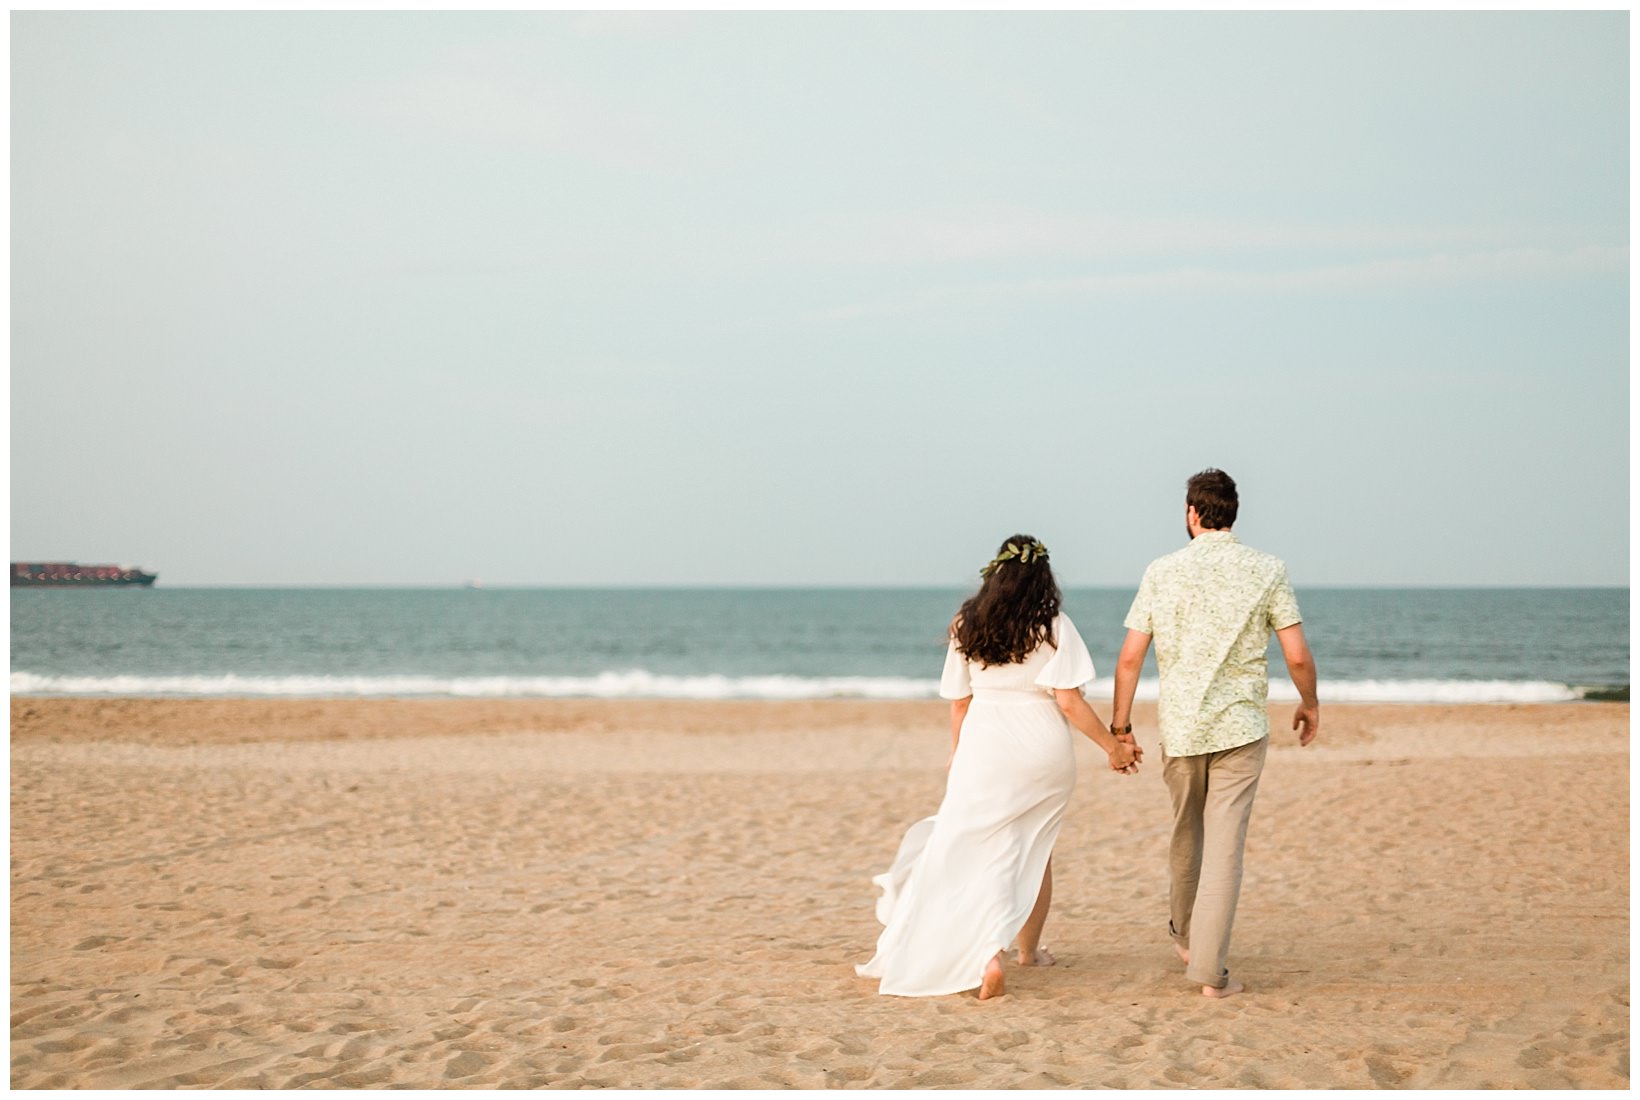 Virginia beachy indie elopement wedding photographer couple inspiration walks on beach